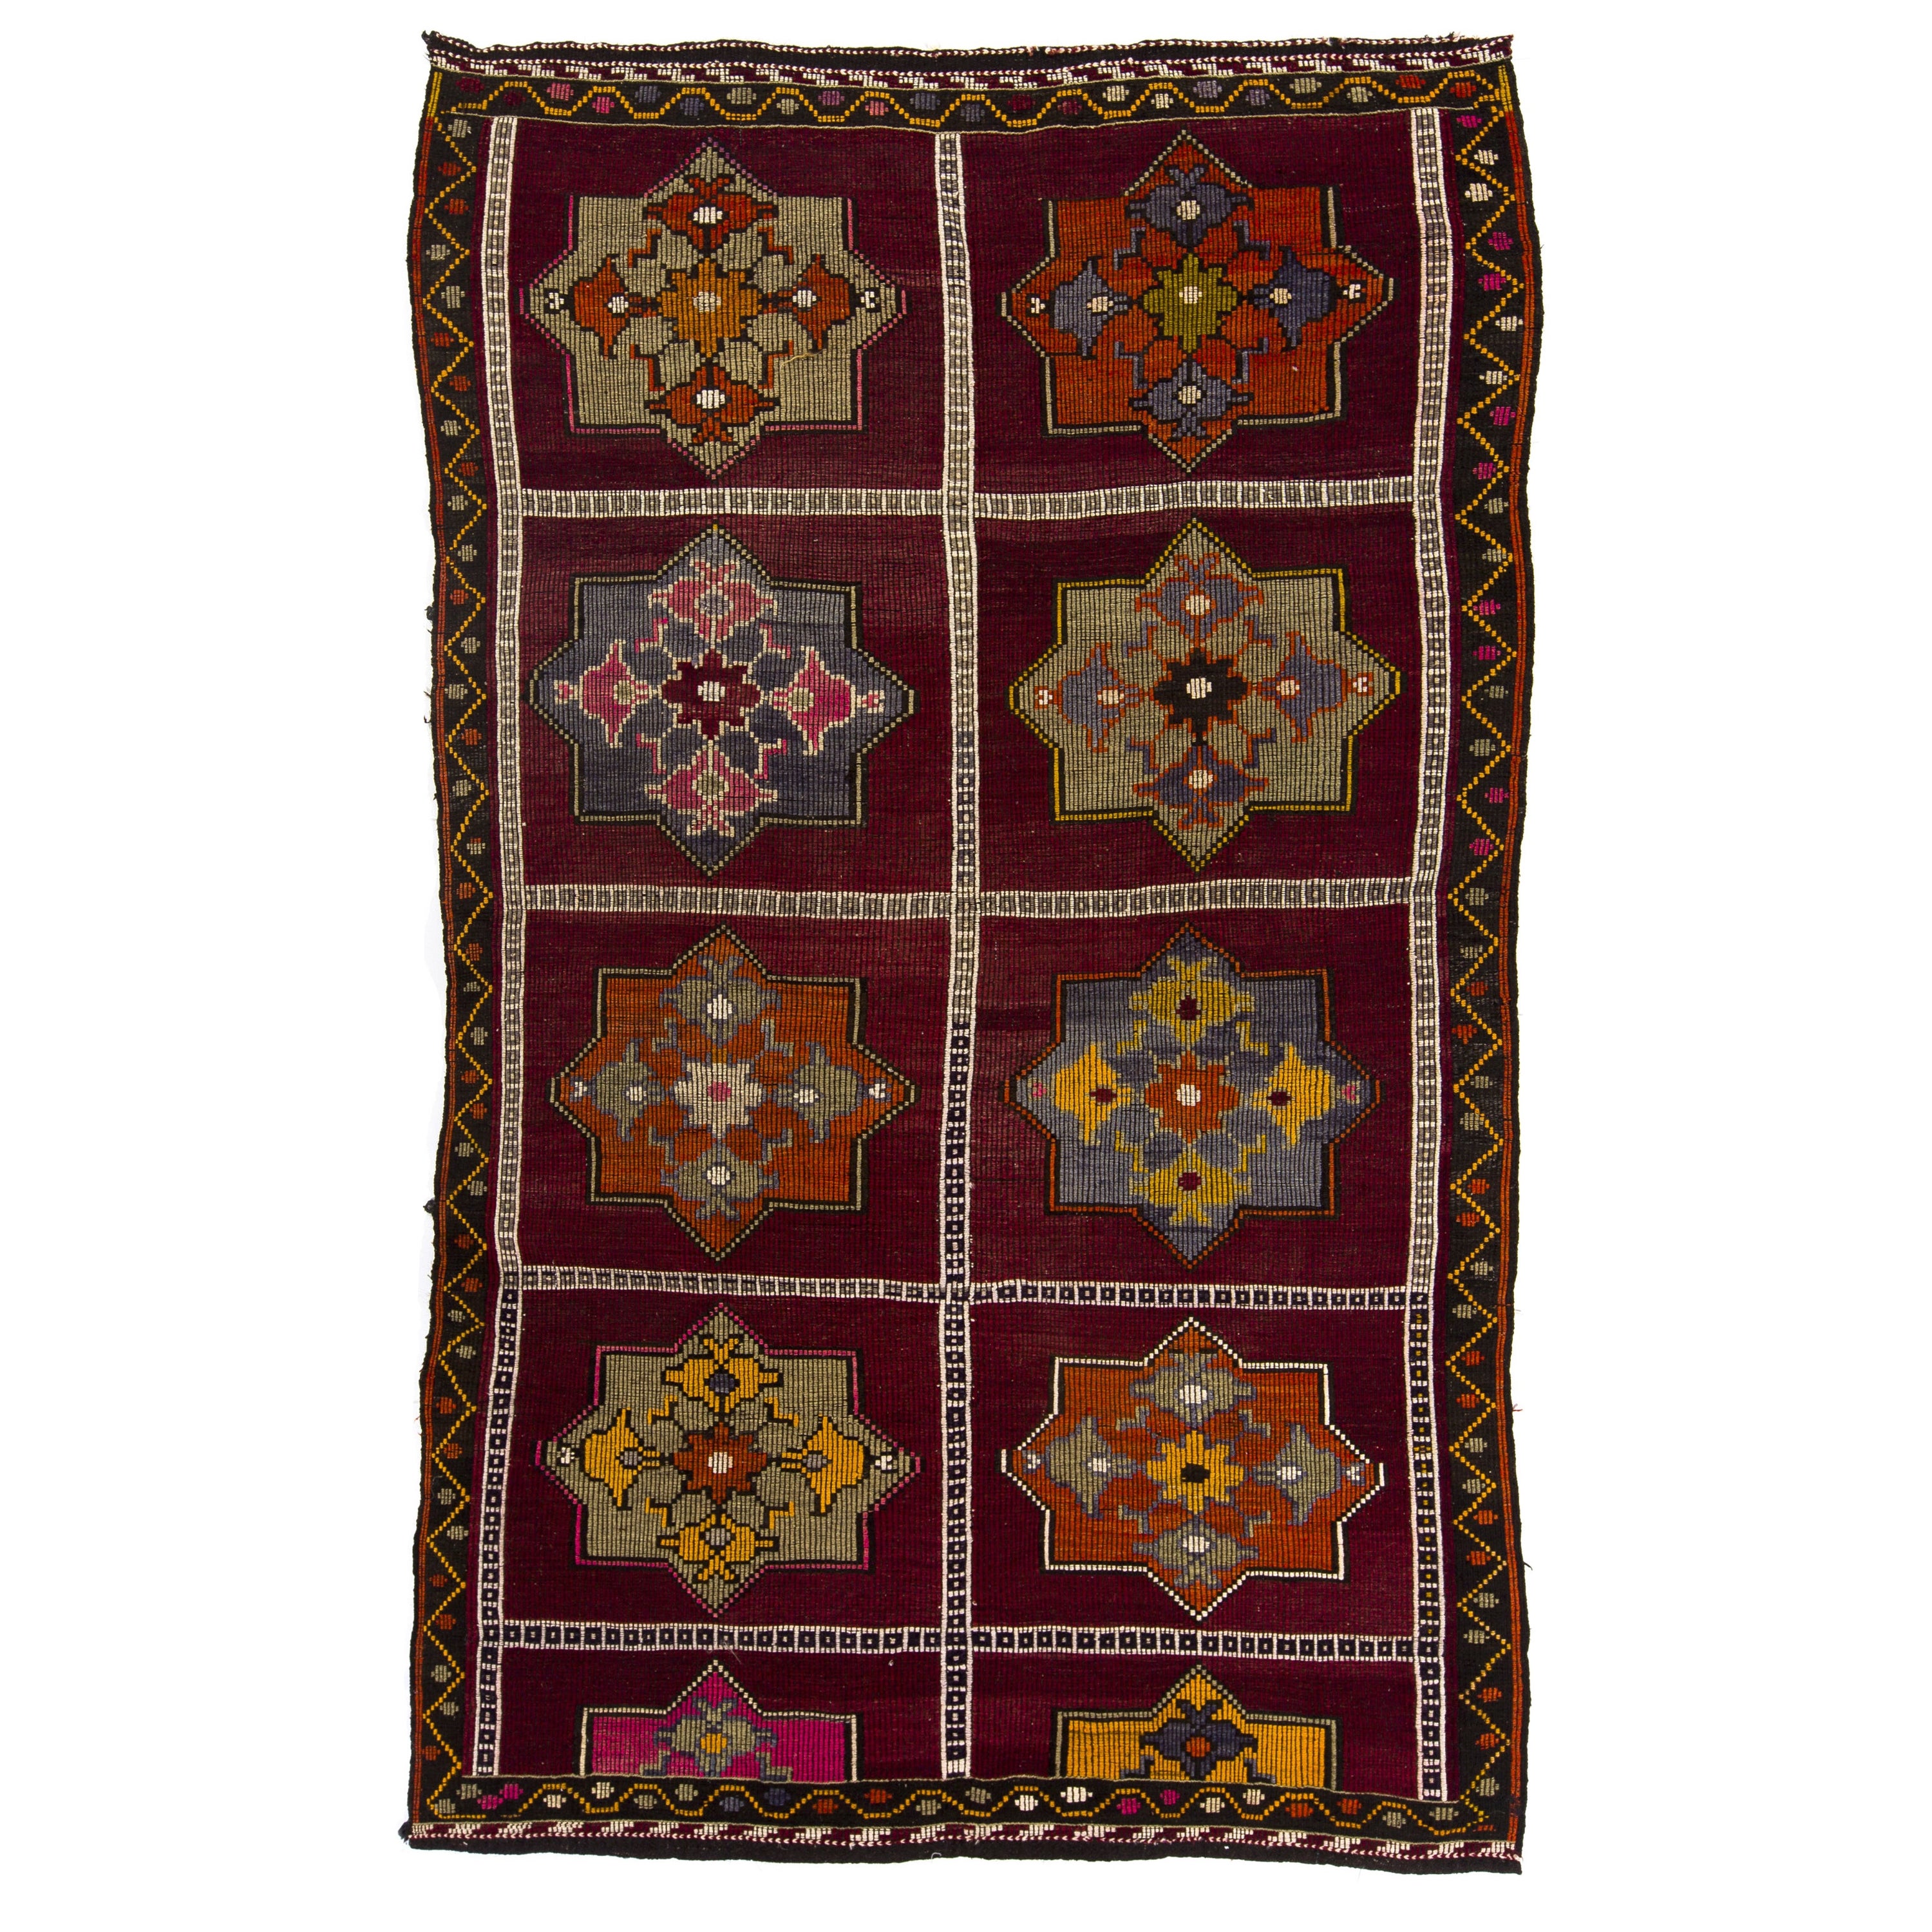 6.3x10.3 Ft Unique Hand-Woven Vintage Anatolian Kilim 'Flat-Weave', 100% Wool